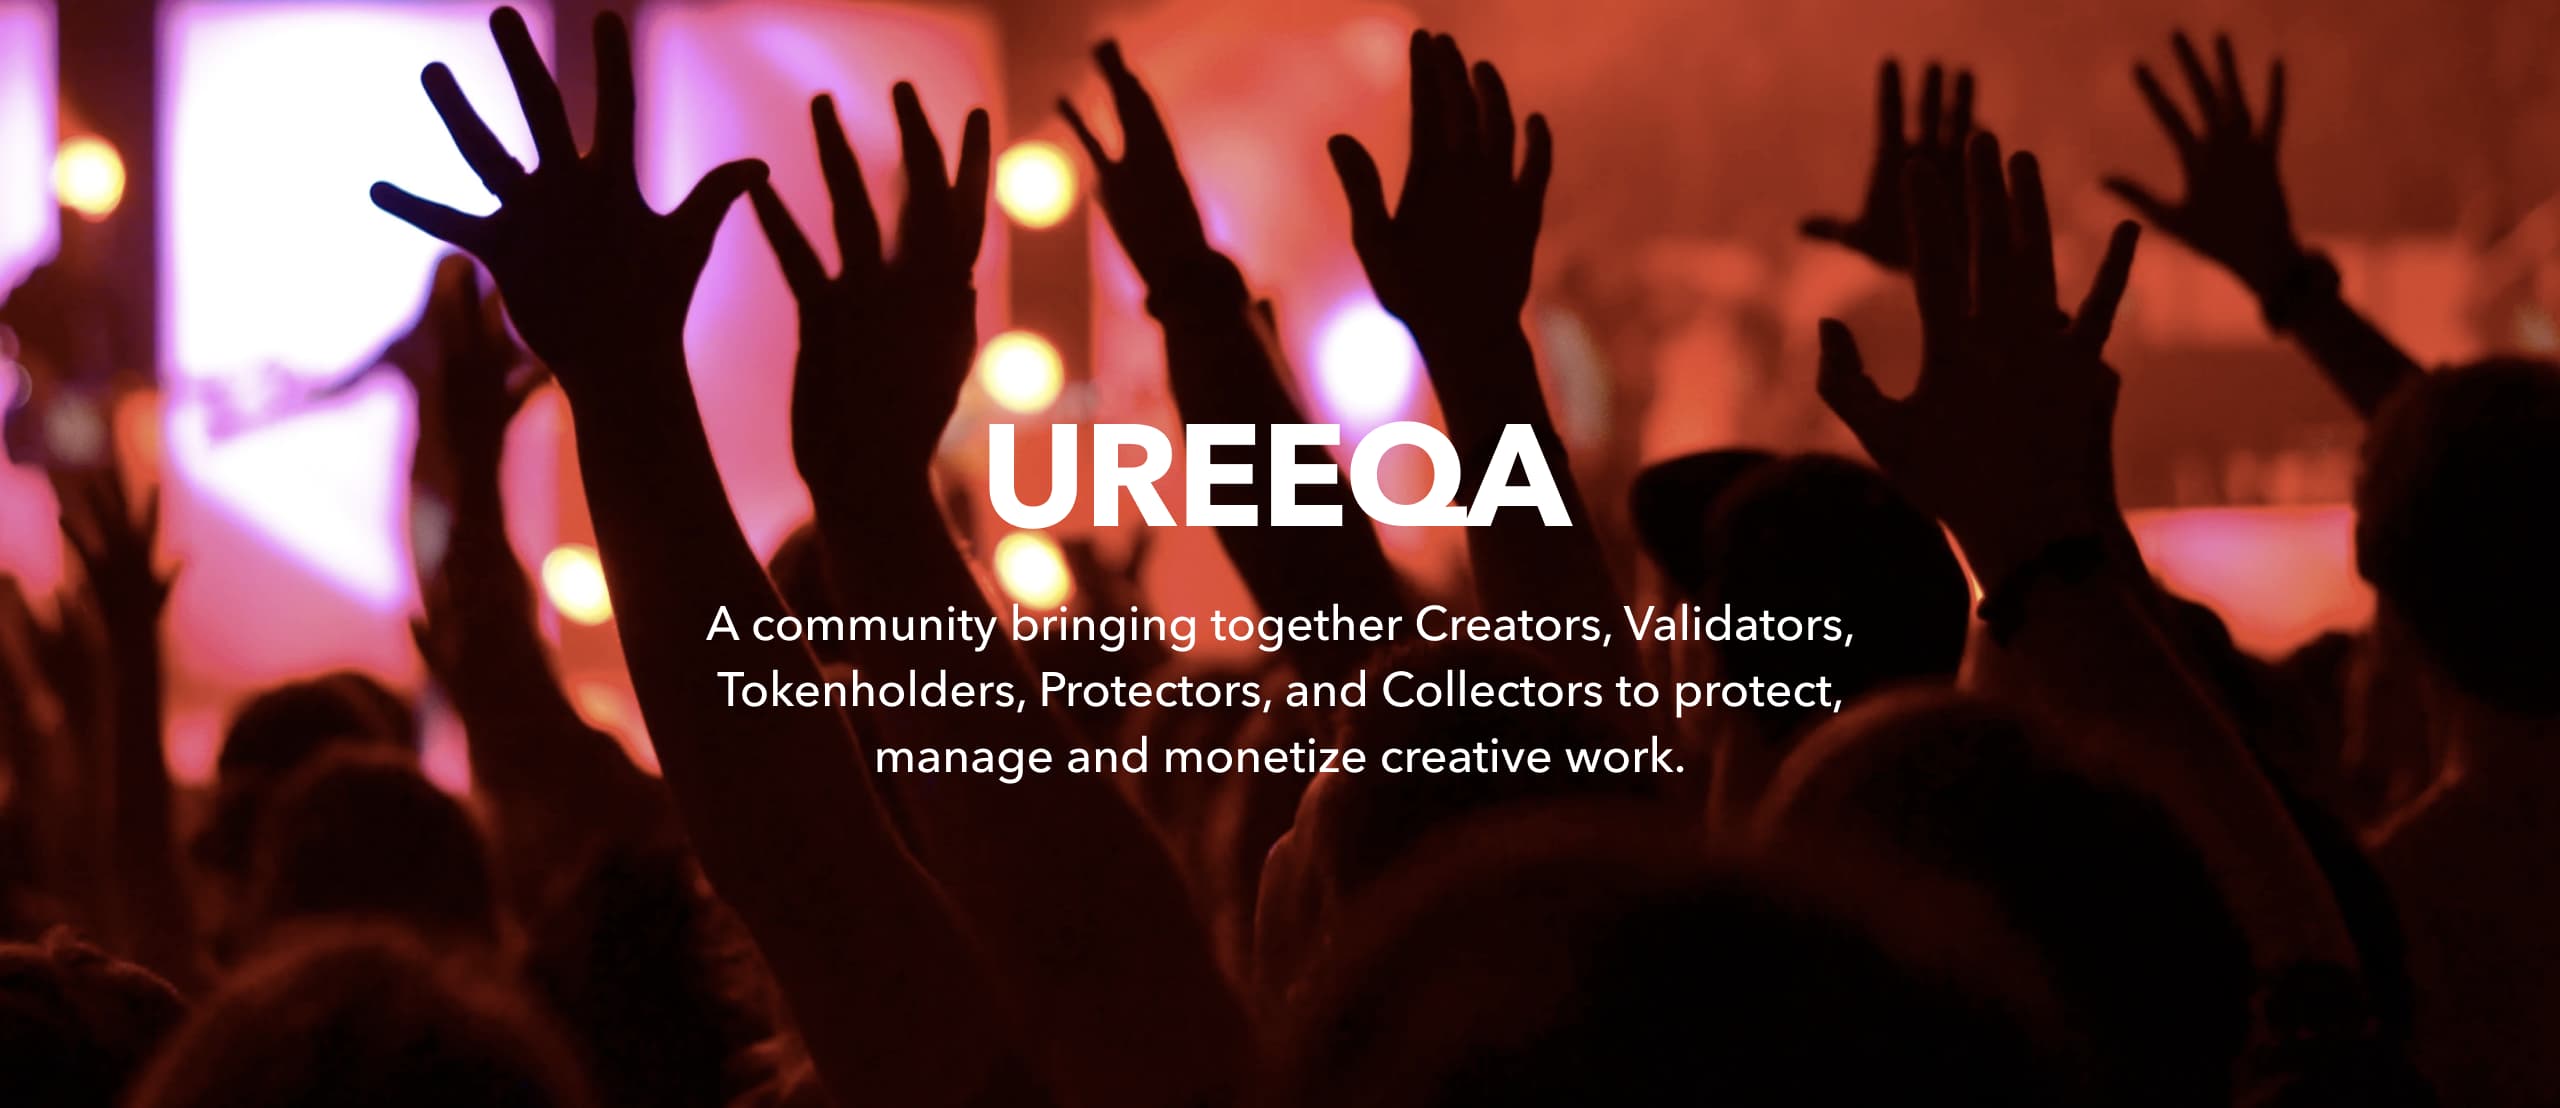 UREEQA: A Platform for Protecting, Managing and Monetizing Creative Work